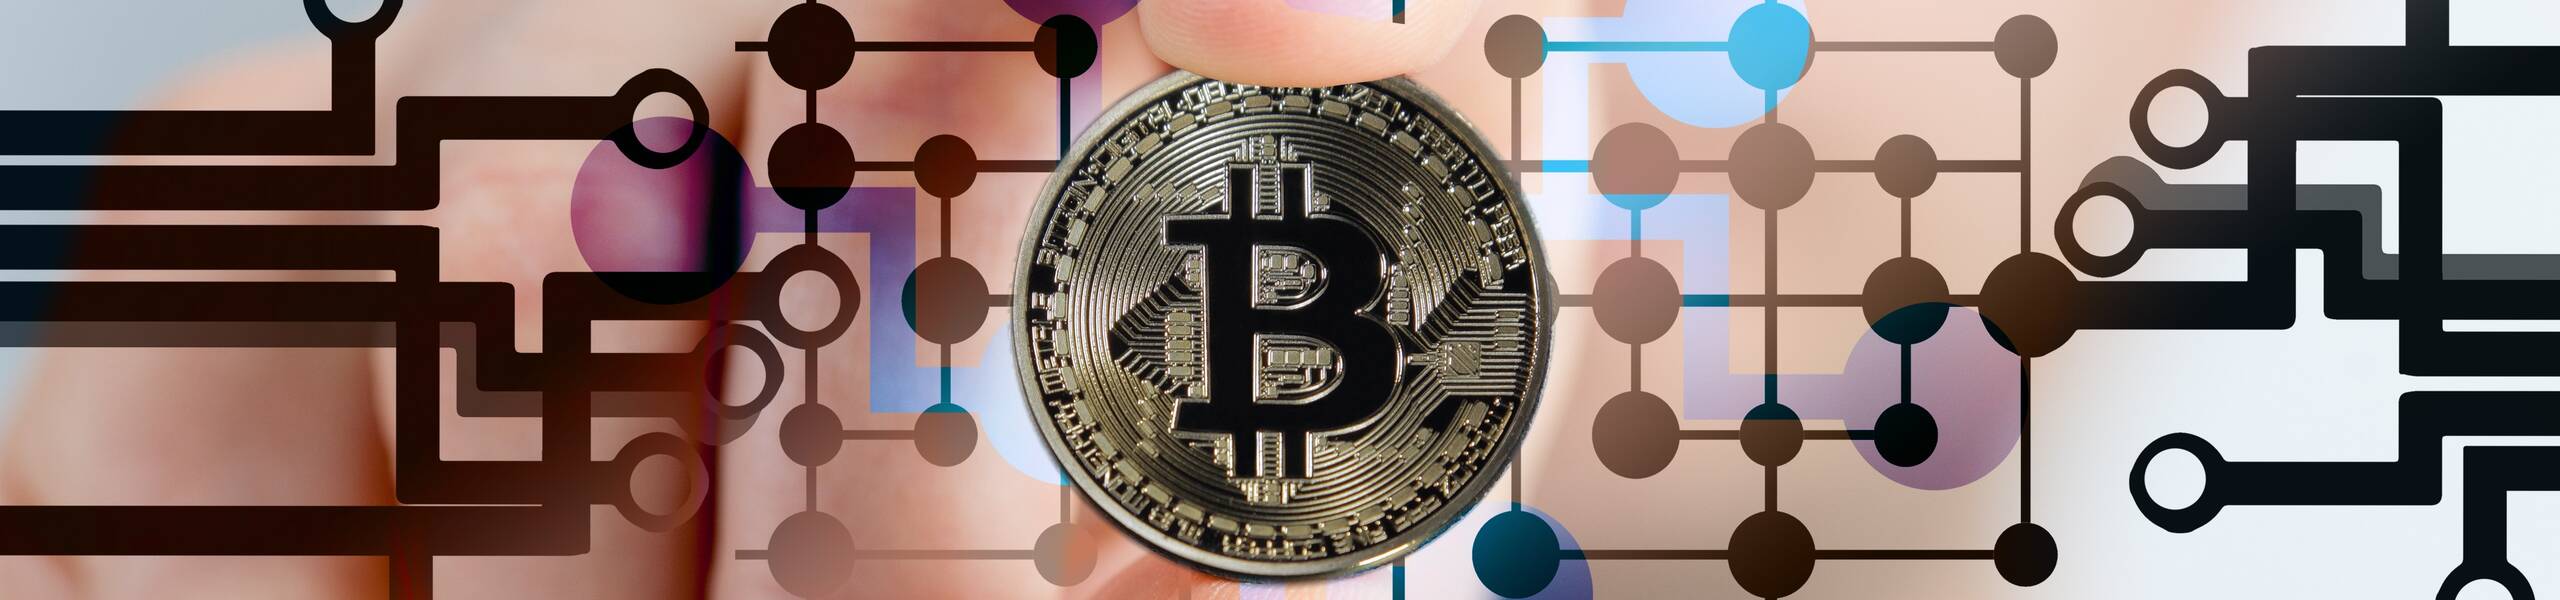 Bitcoin (BTC/USD) looking to reach the 100% Fibo level